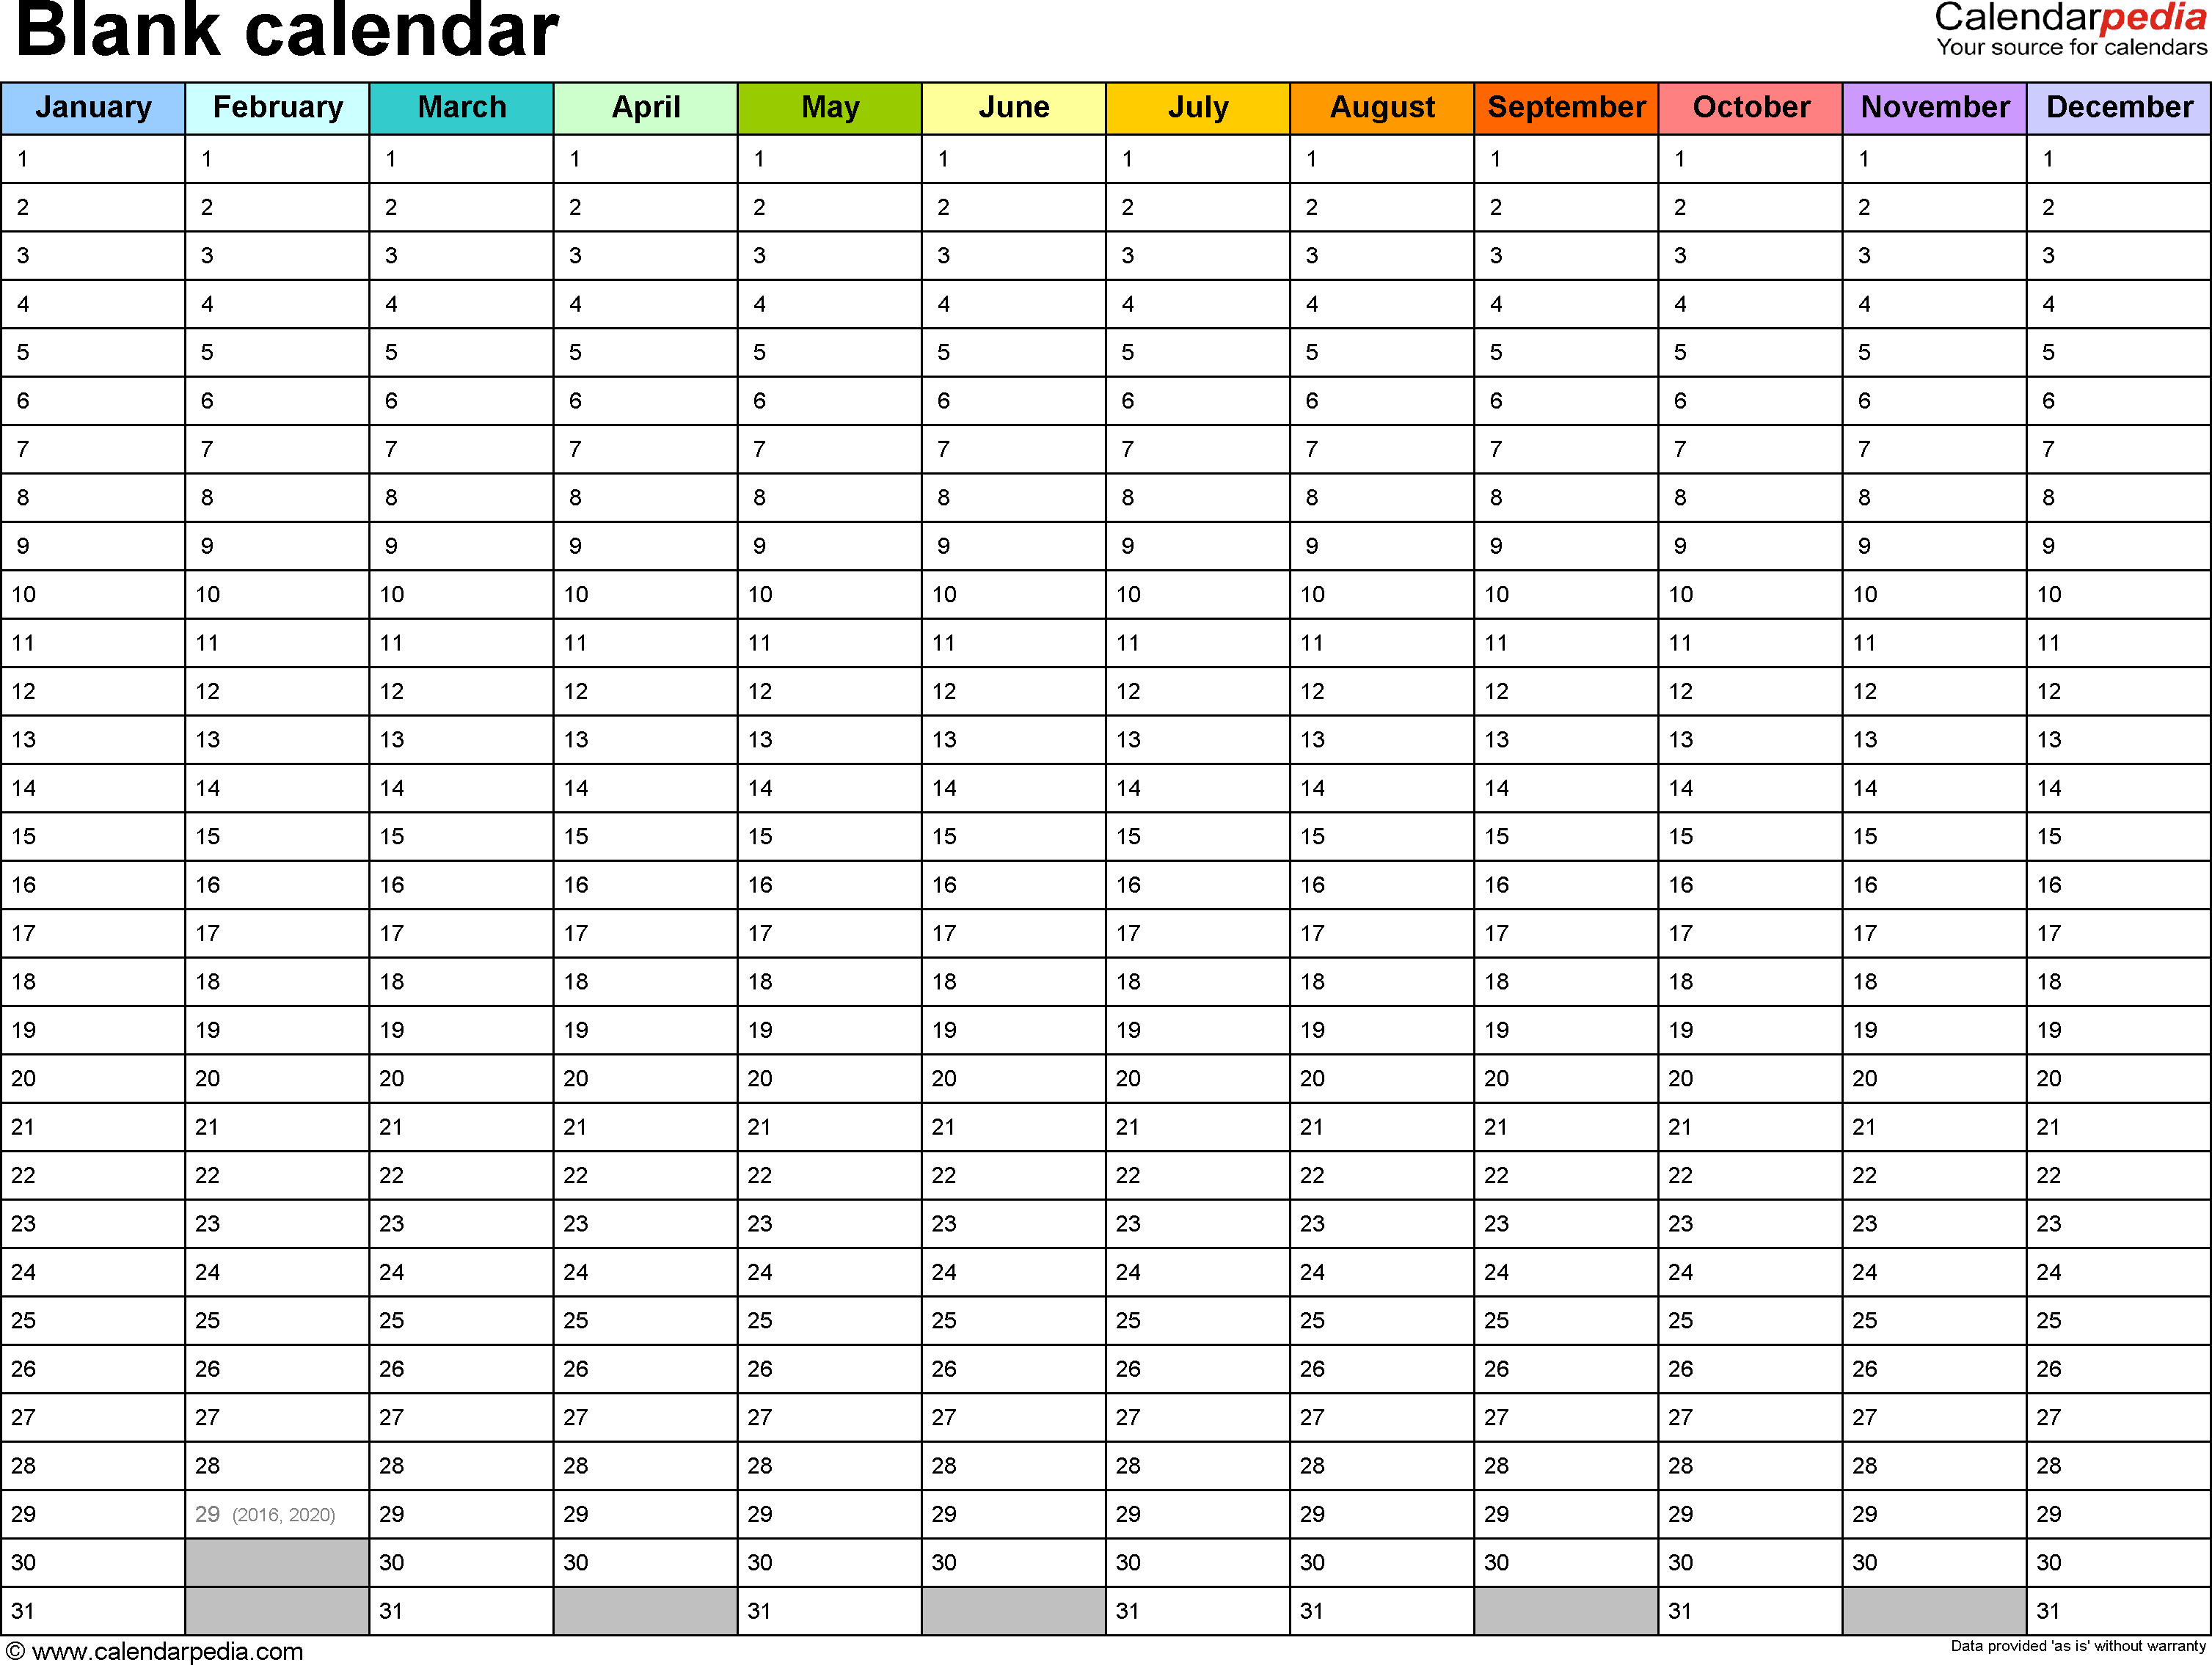 blank yearly calendar grids on one sheet blank calendar OLhMjC